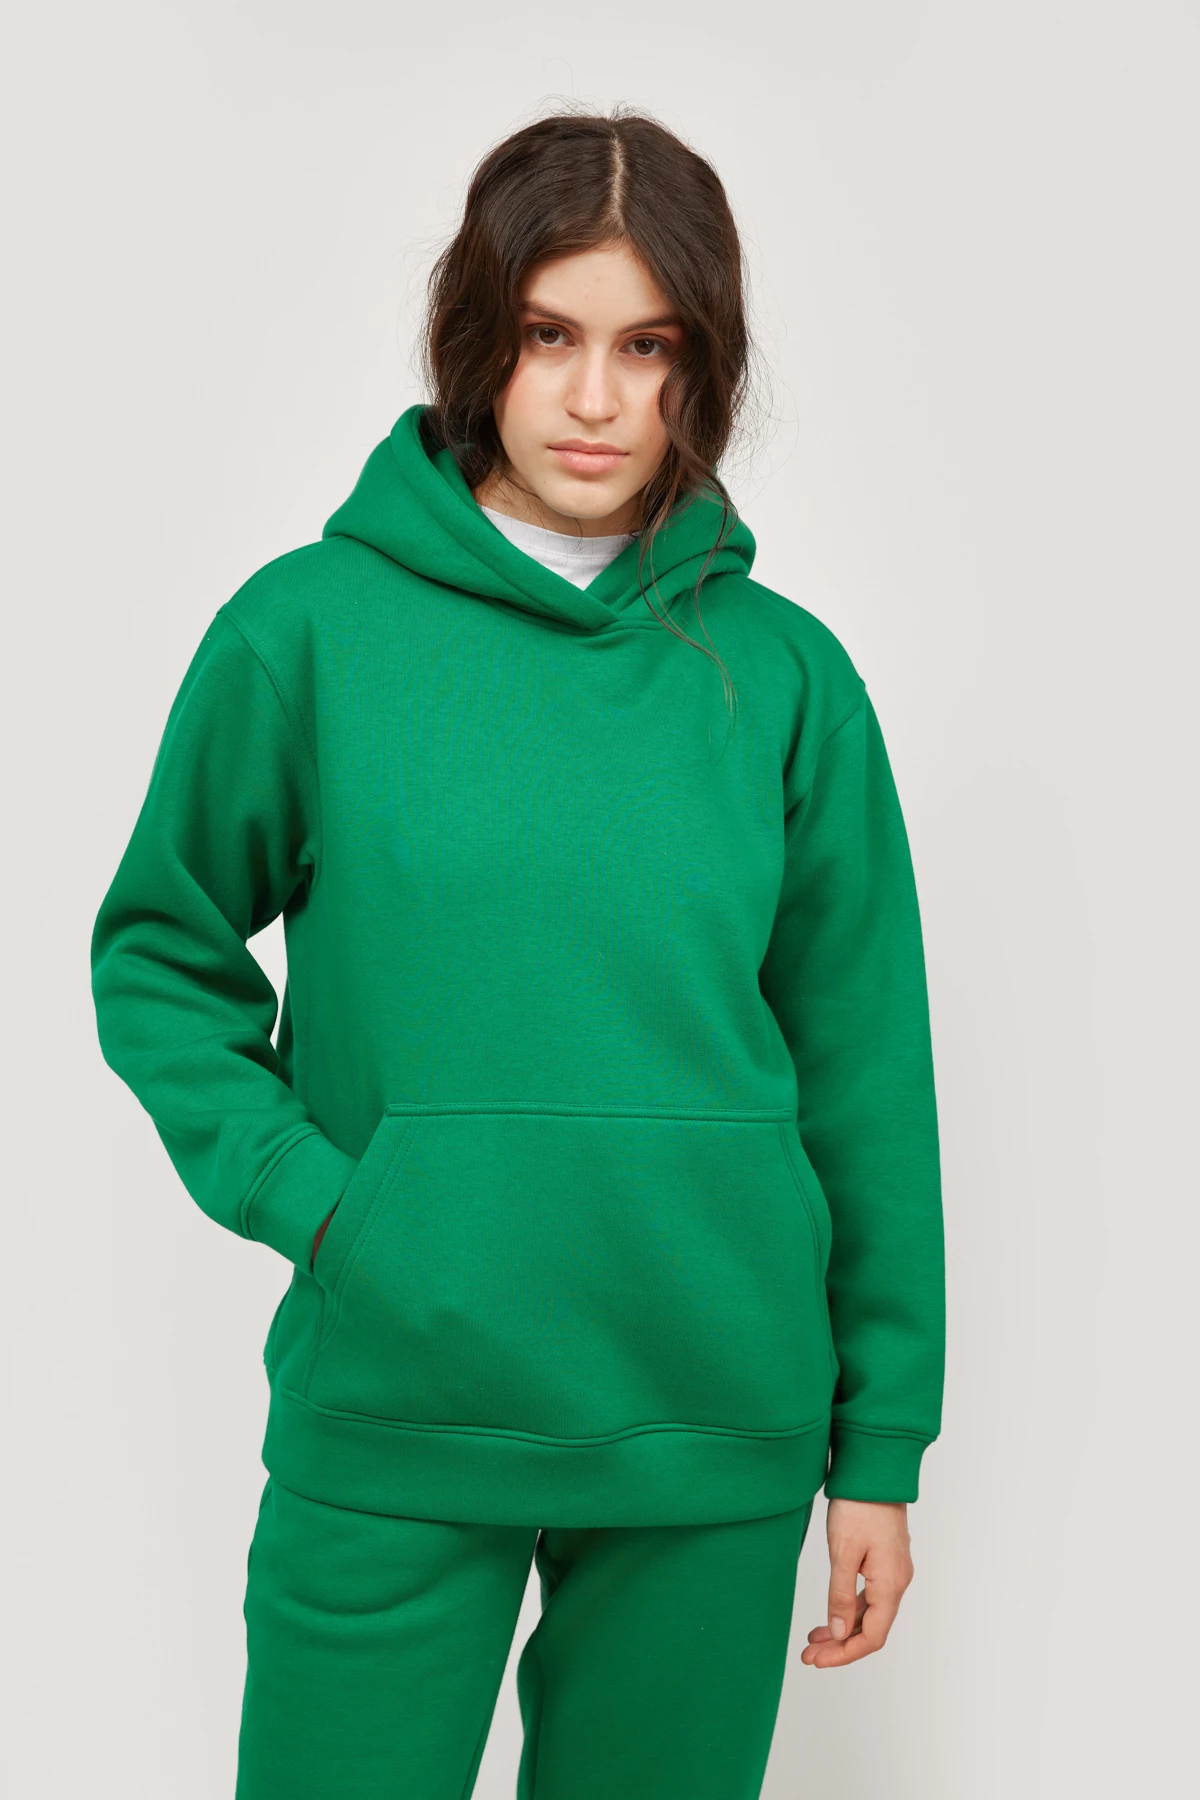 Oversized green hoodie, photo 3